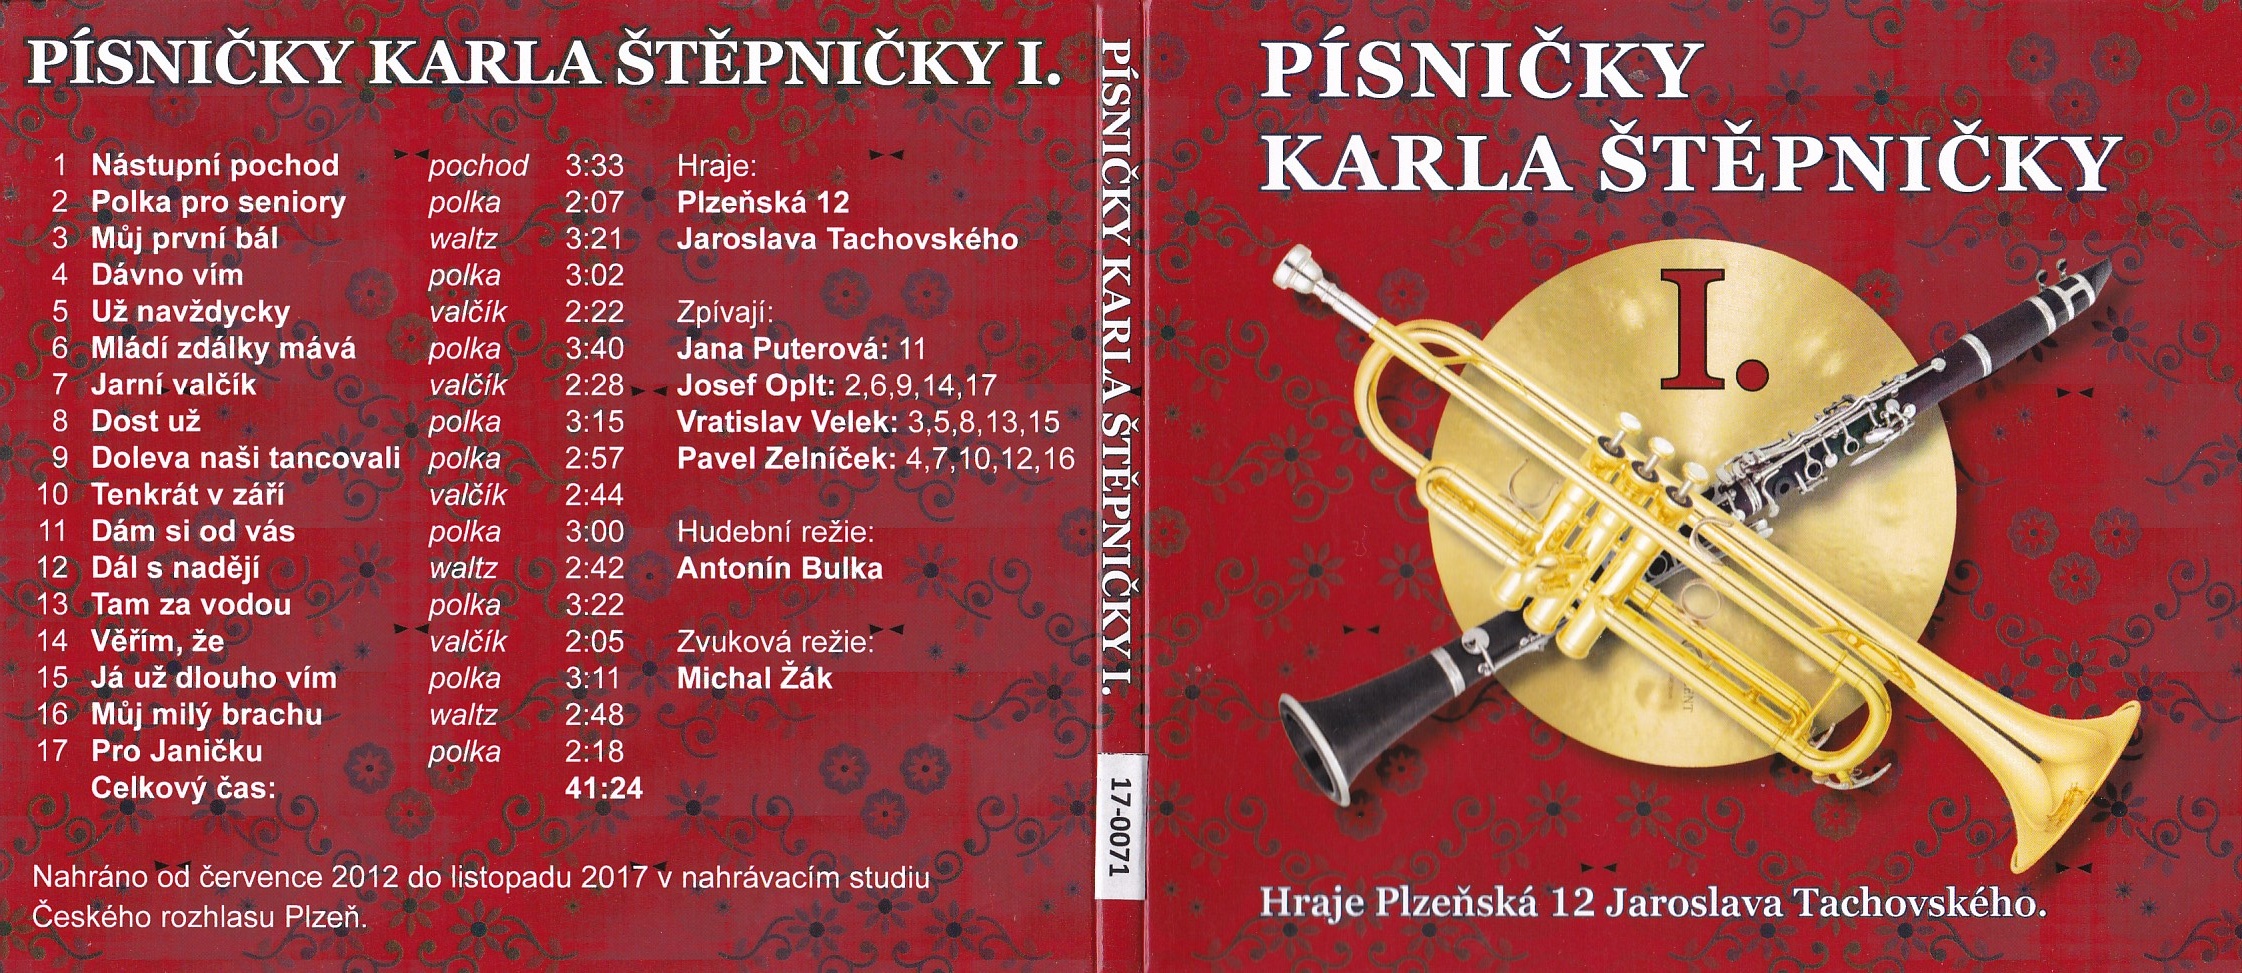 Písničky Karla Štěpničky 1.; 